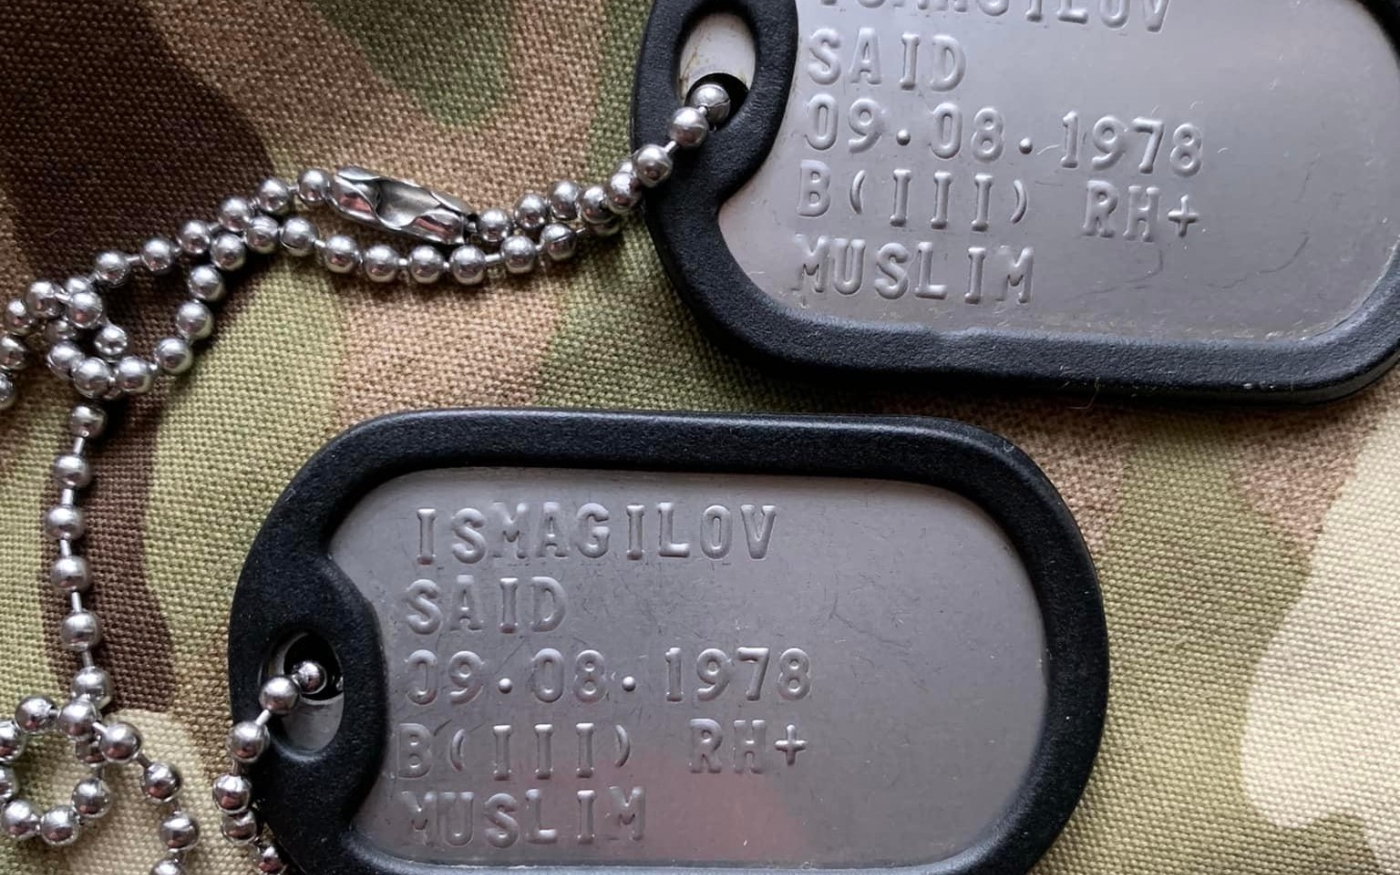 Les plaques militaires de Said Ismagilov (Facebook)